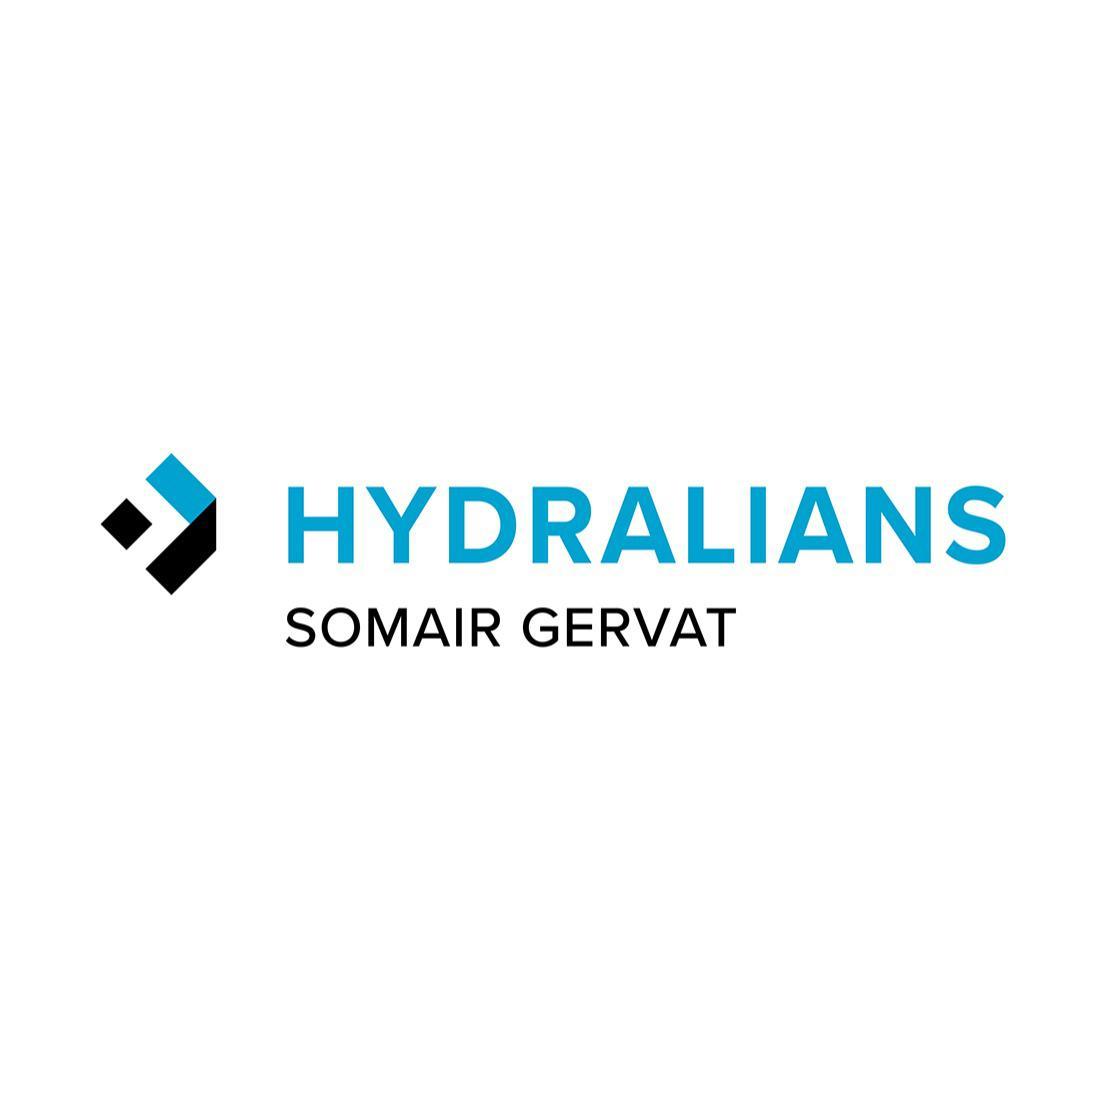 Hydralians Somair Gervat Roanne Roanne